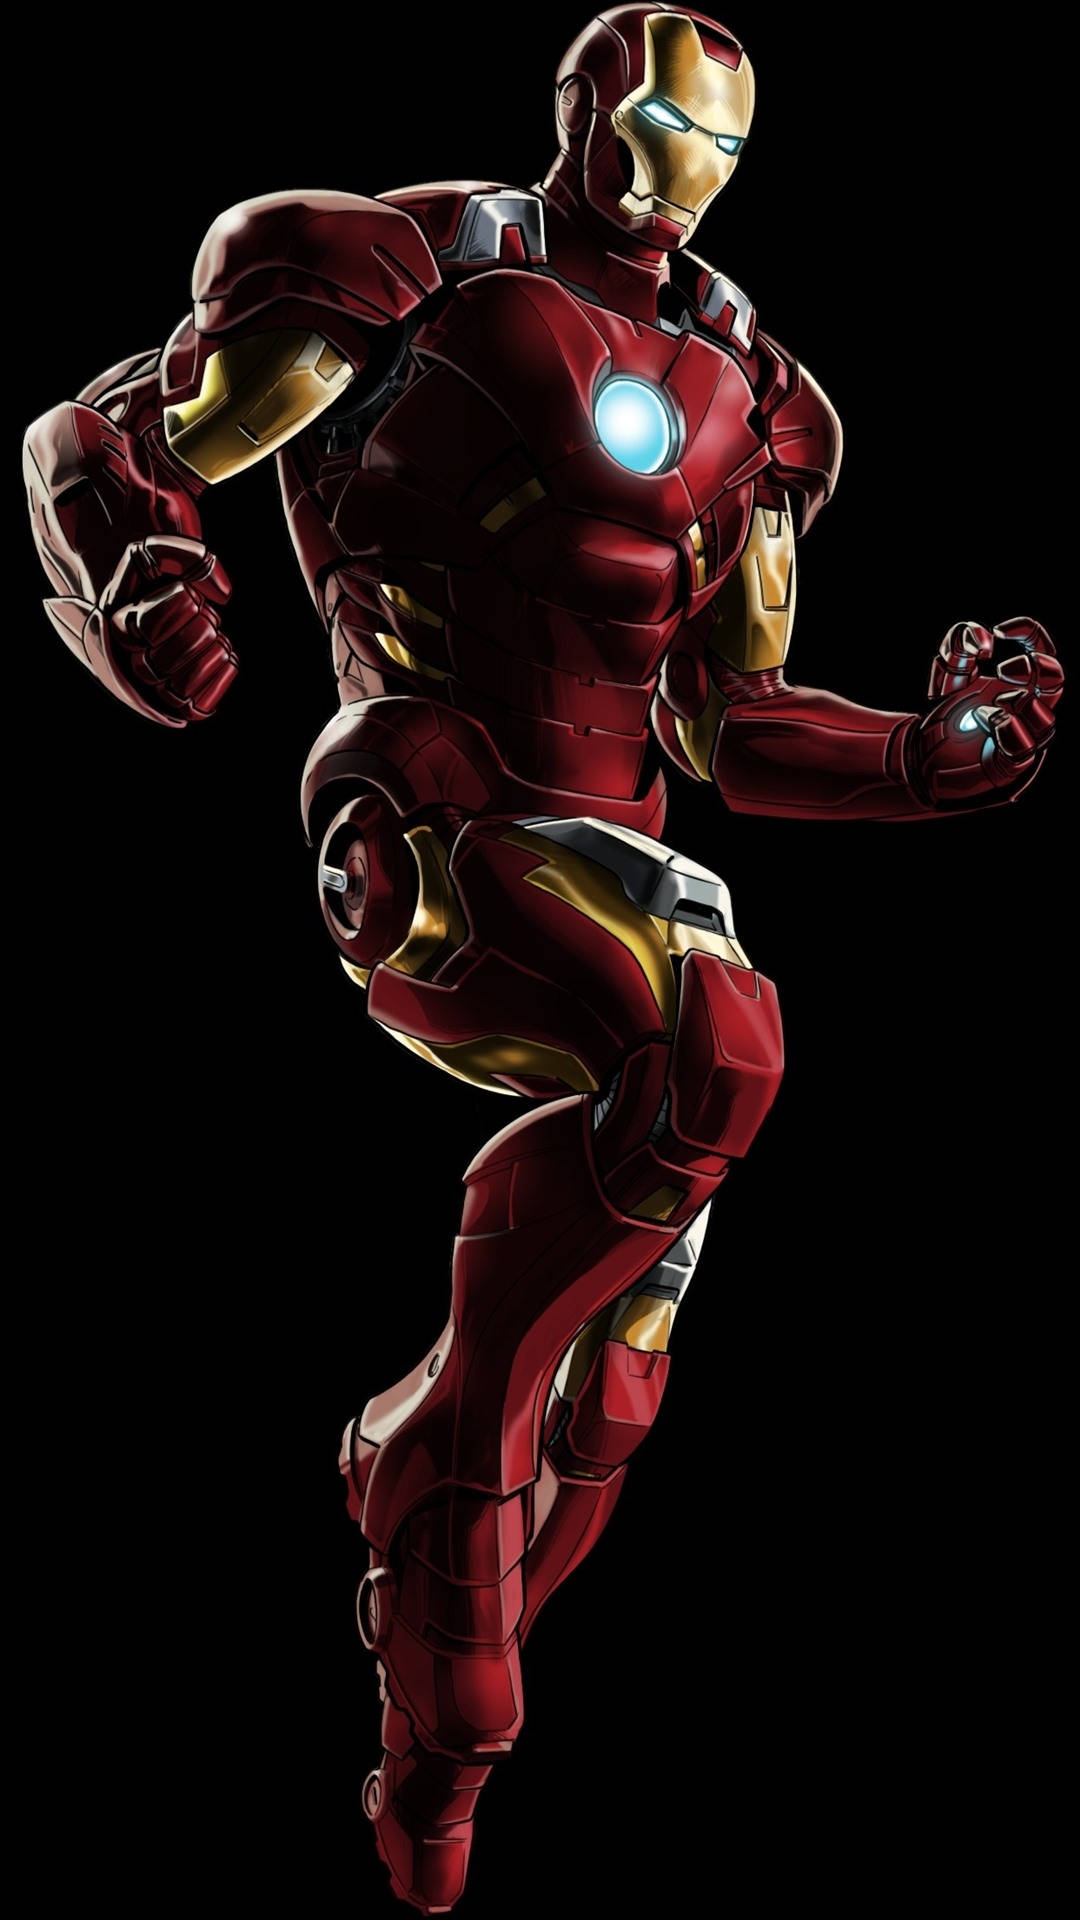 Sfondonero In Hd - Supereroe Iron Man Sfondo